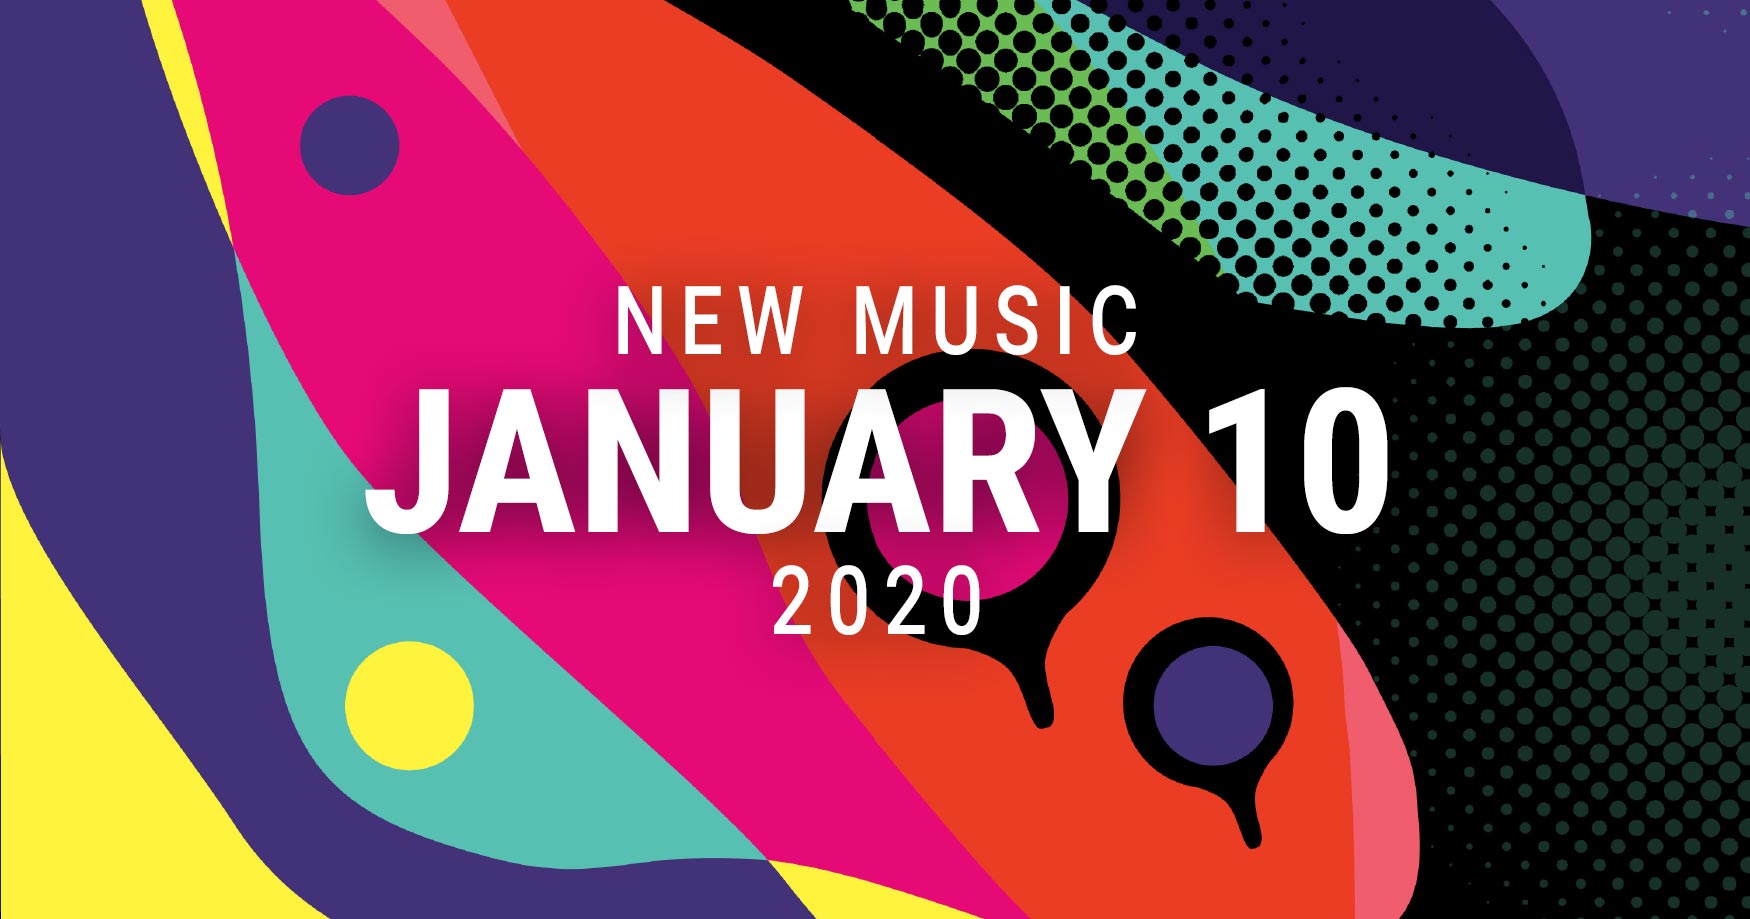 New Music January 10 2020